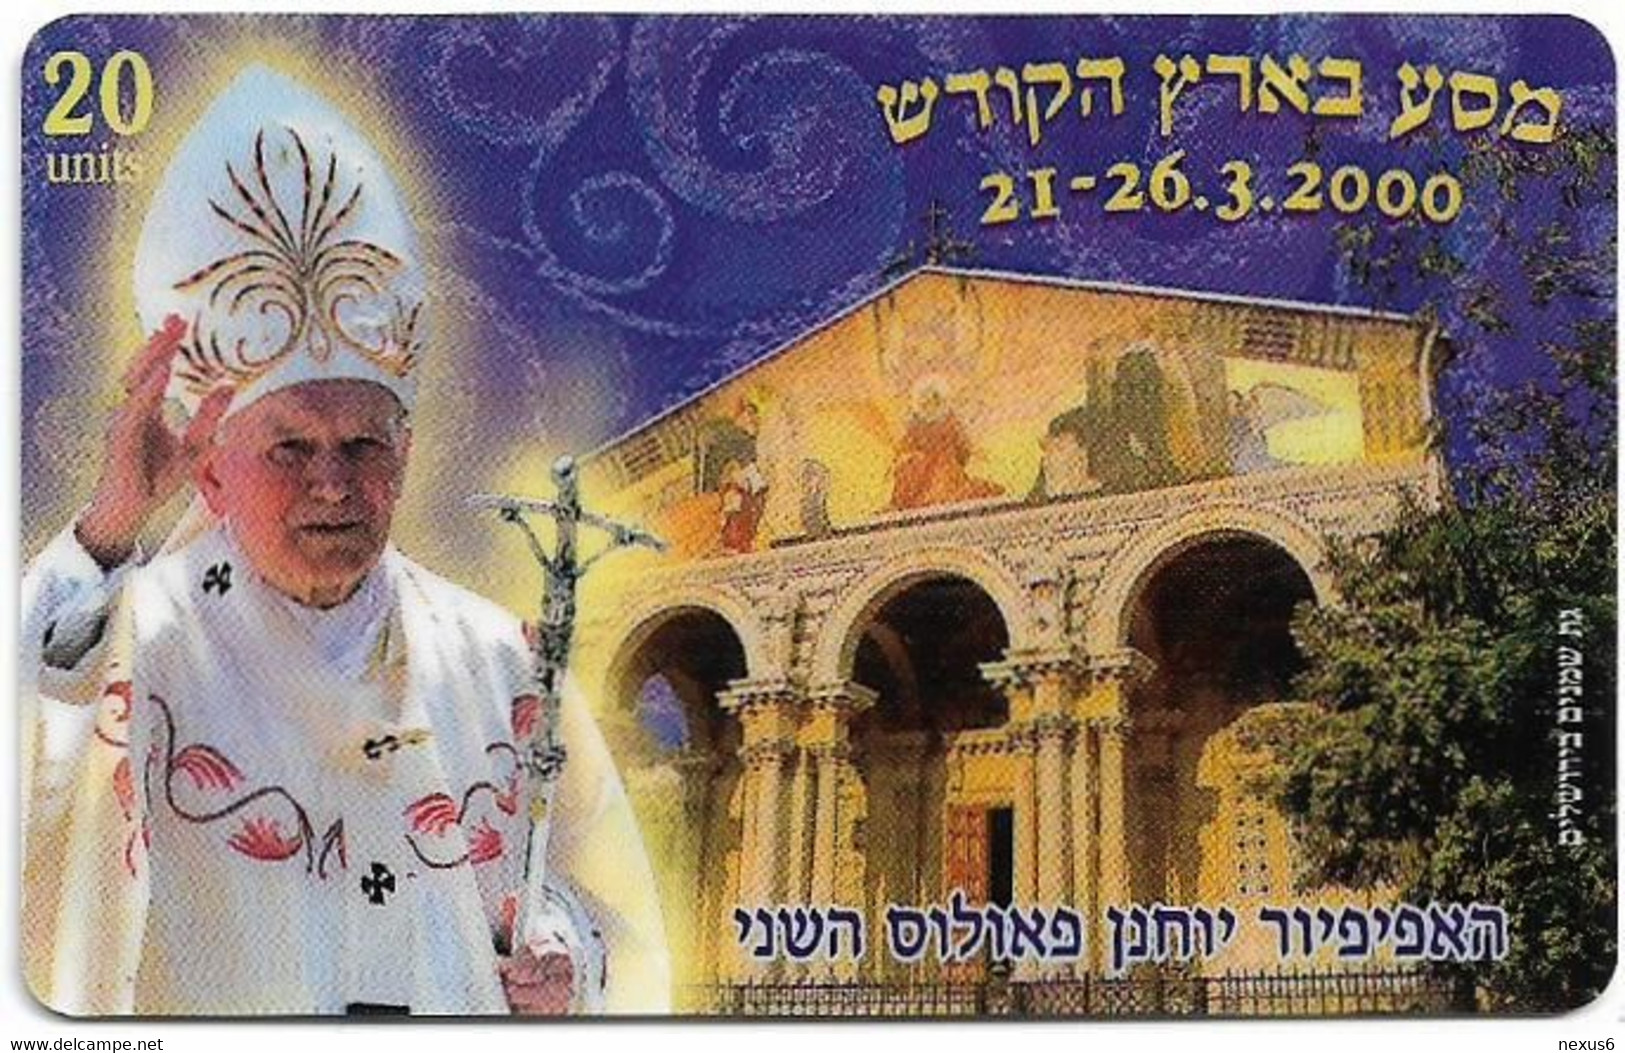 Israel - ATS Israel Telecom - Pope John Paul II's Visit In Israel 4/5, FAKE Remote 20Units, 200ex - Israel